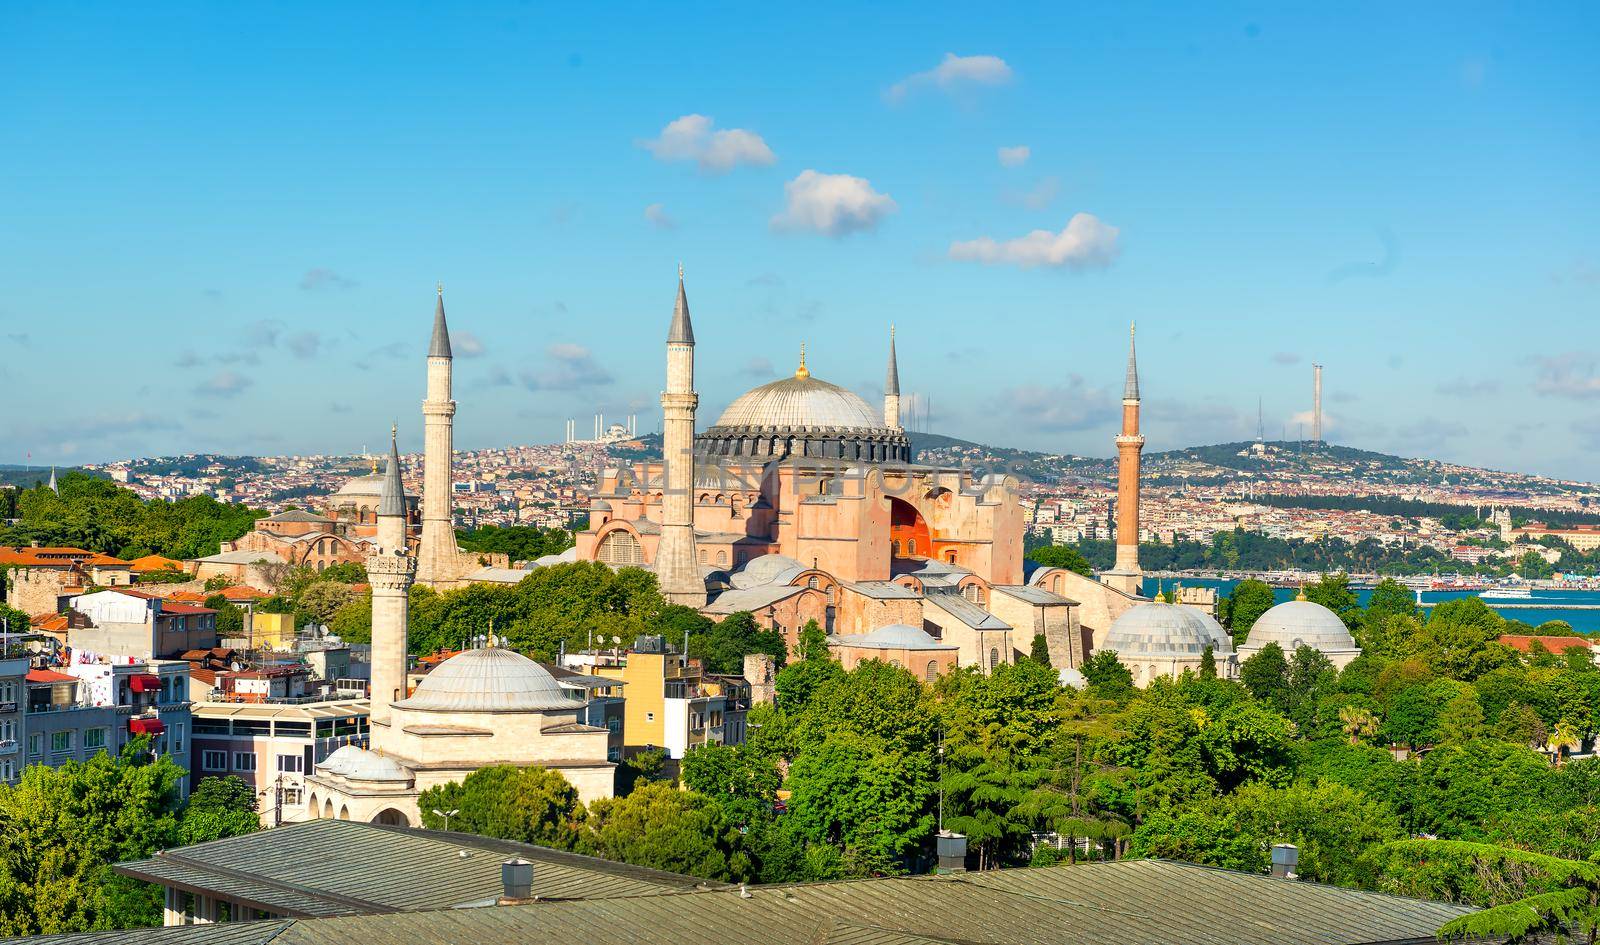 Hagia Sophia in summer Istanbul at sunny day, Turkey